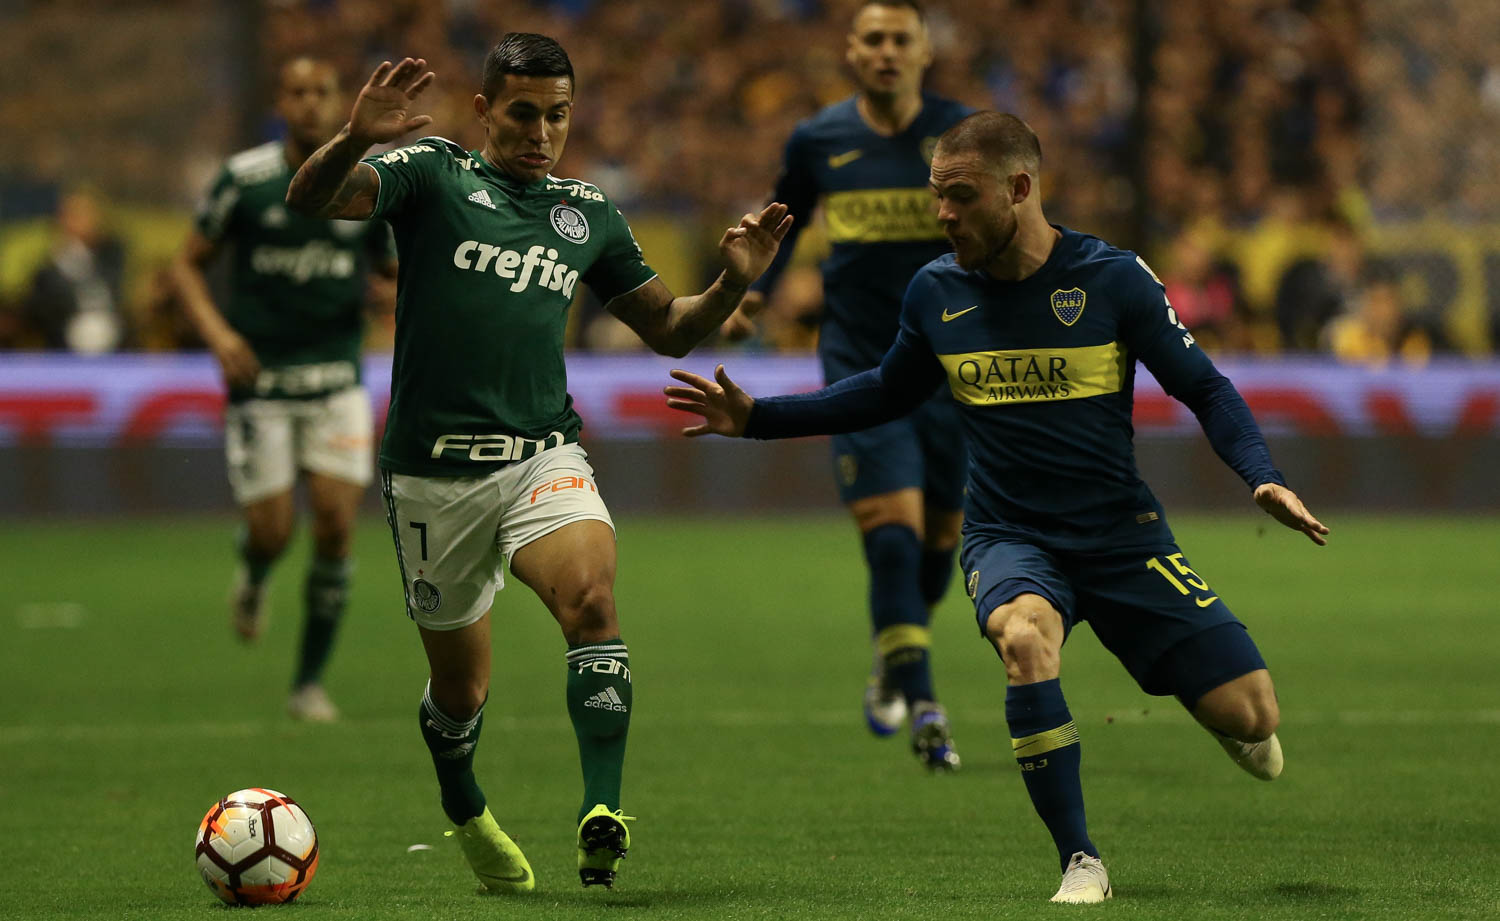 Copa Libertadores: Palmeiras vs Boca Juniors Preview